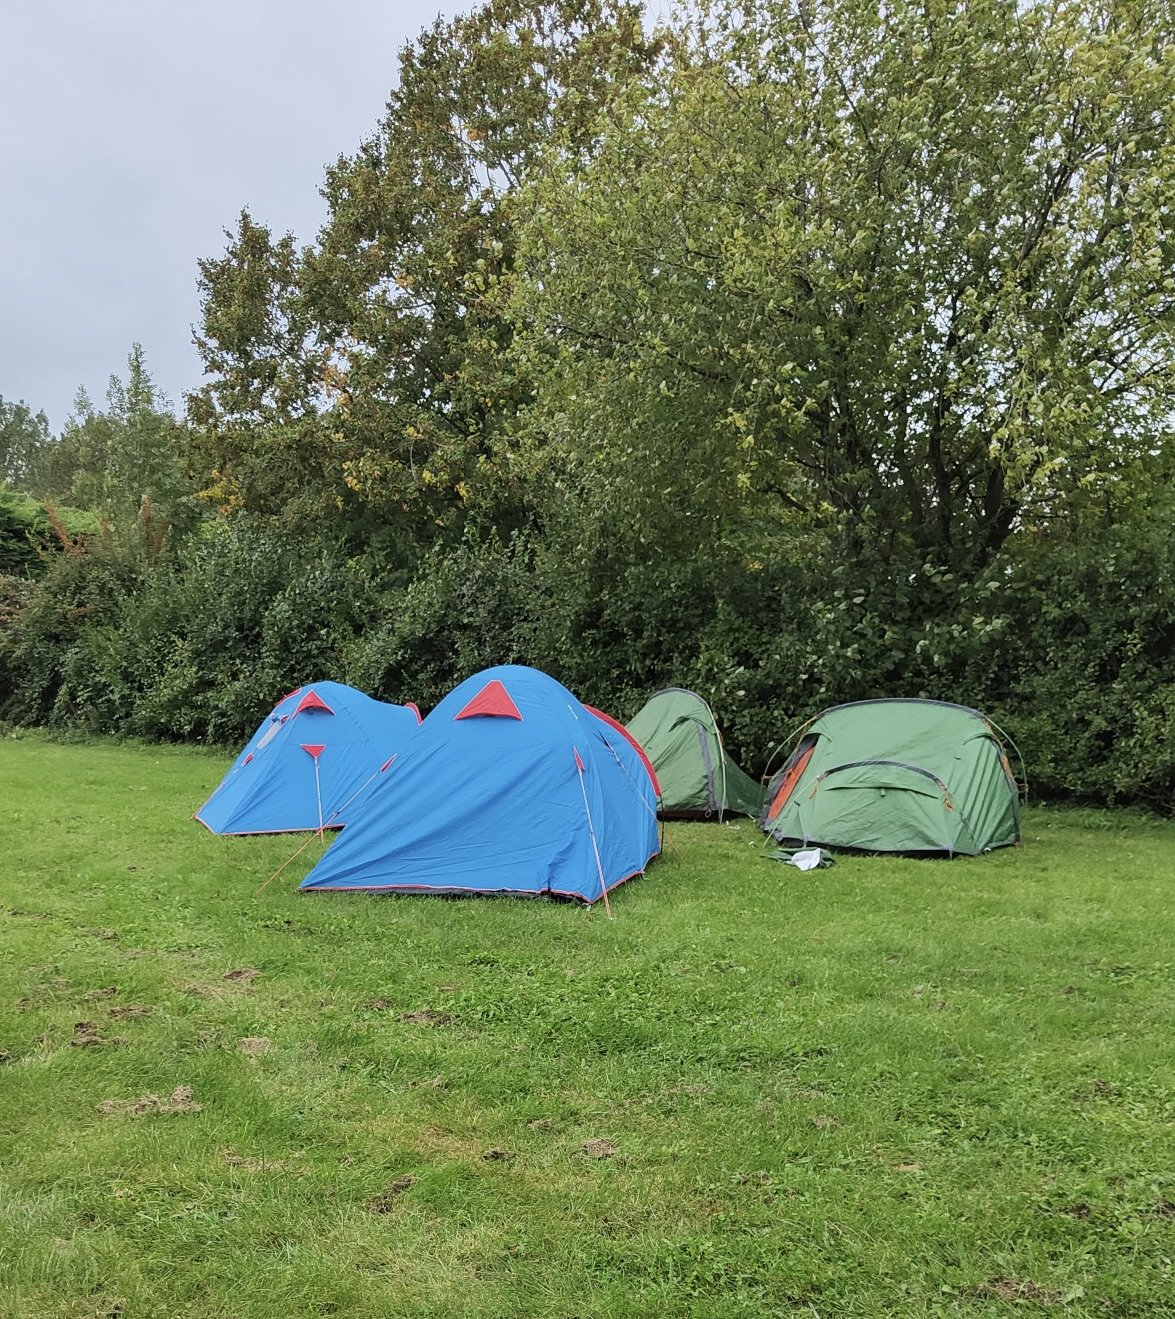 The scouts' campsite